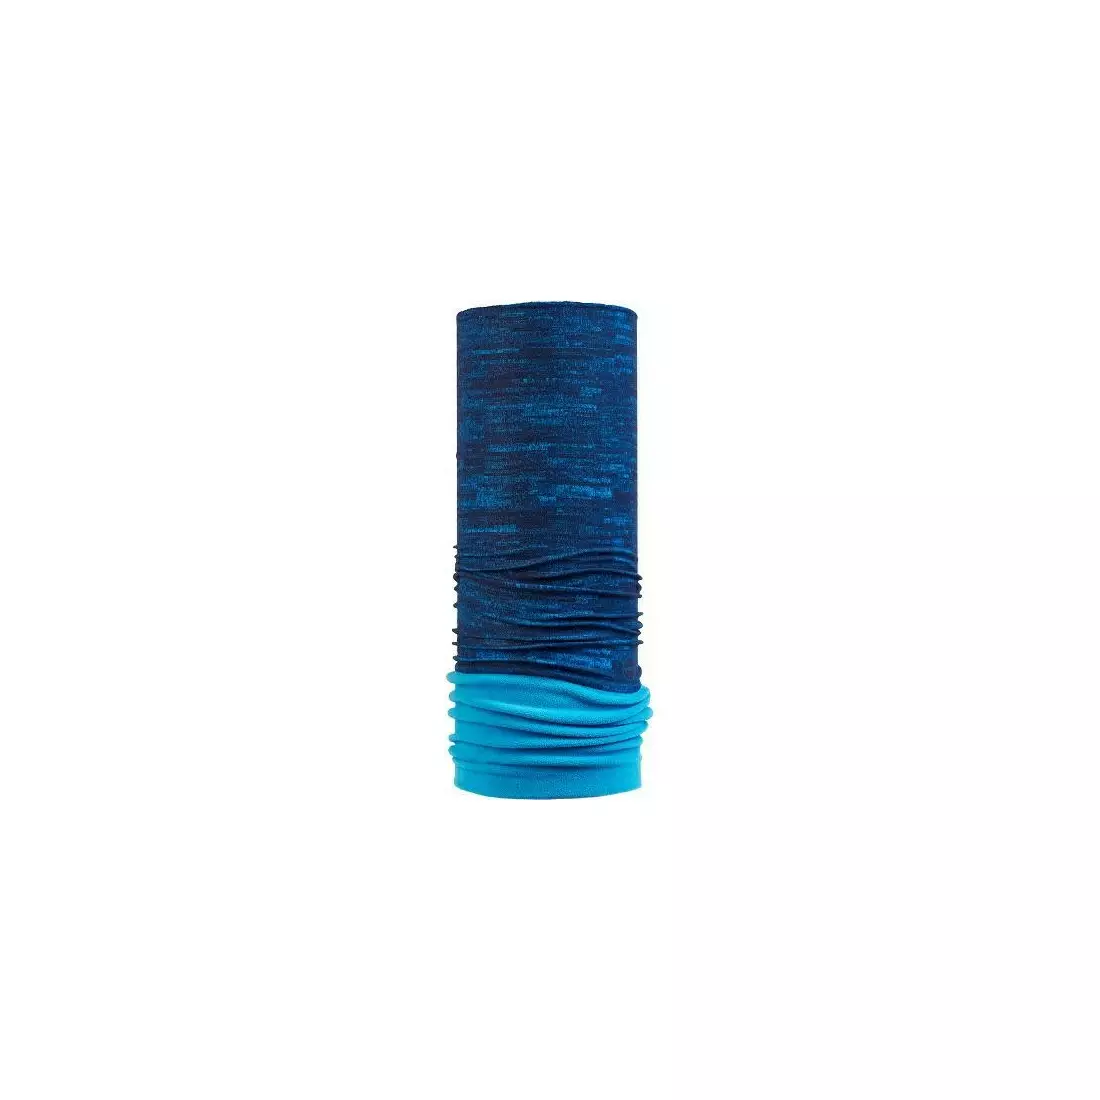 CAIRN multifunctional scarf MALAWI POLAR TUBE blue